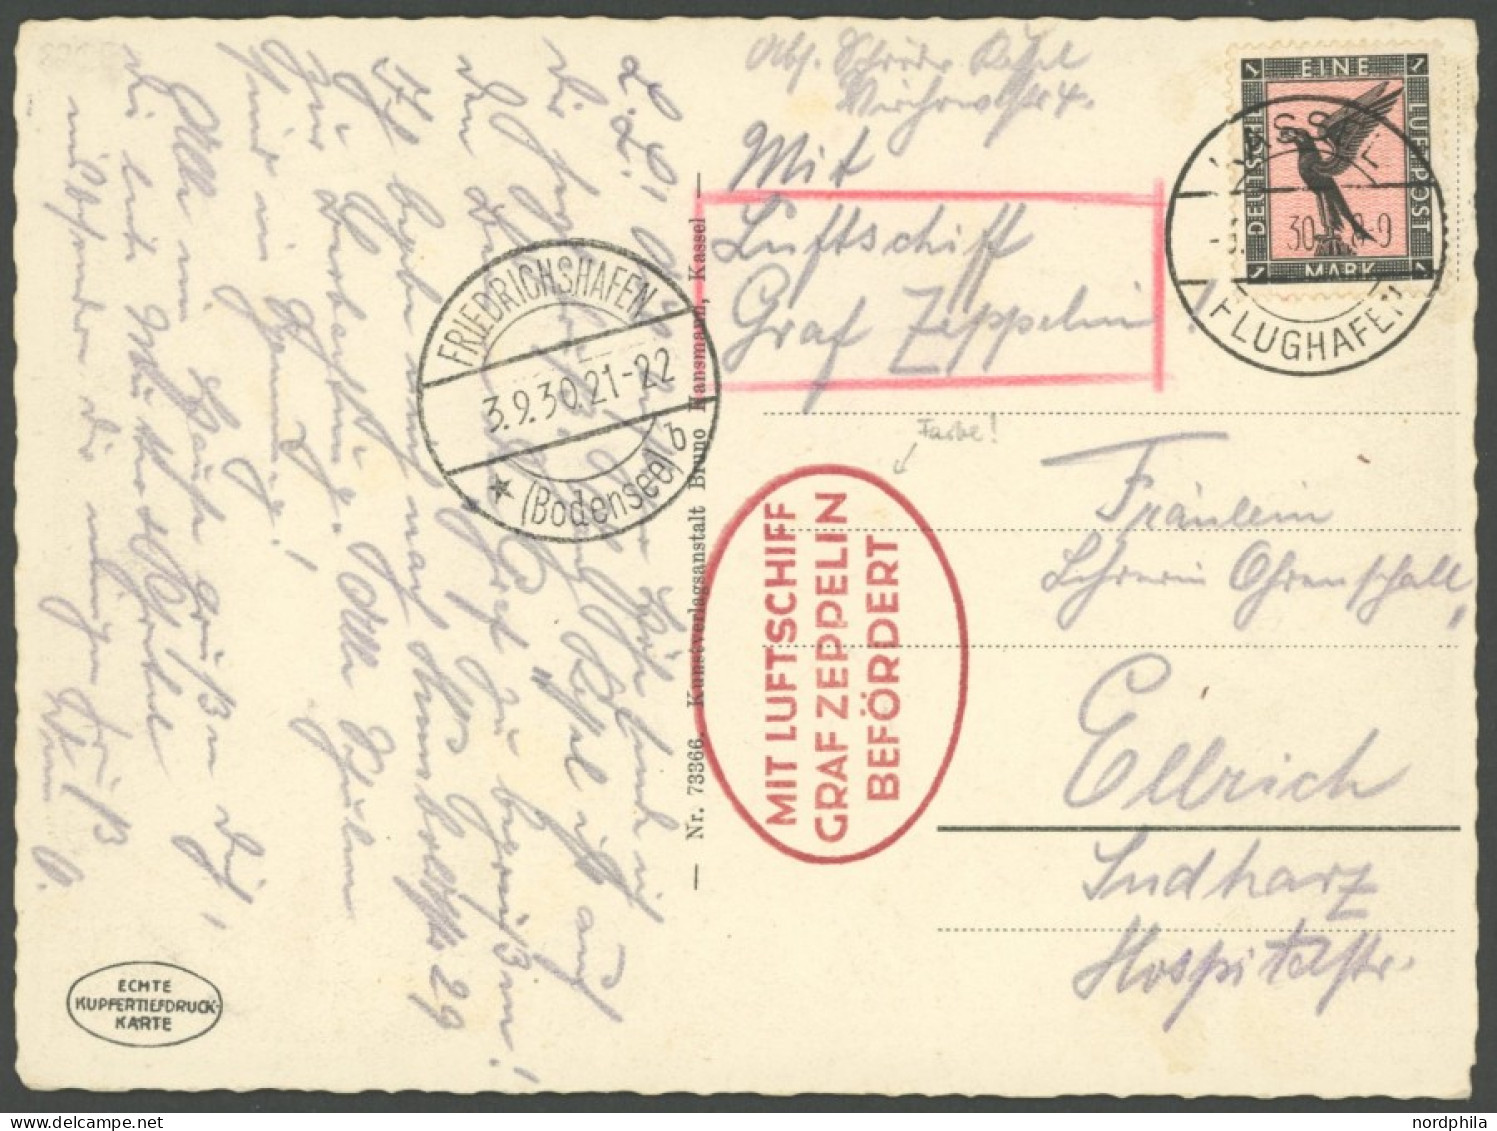 ZEPPELINPOST 82Ca BRIEF, 1930, Landungsfahrt Nach Kassel, Auflieferung Kassel, Bestätigungsstempel Type I In Dunkelrot,  - Airmail & Zeppelin